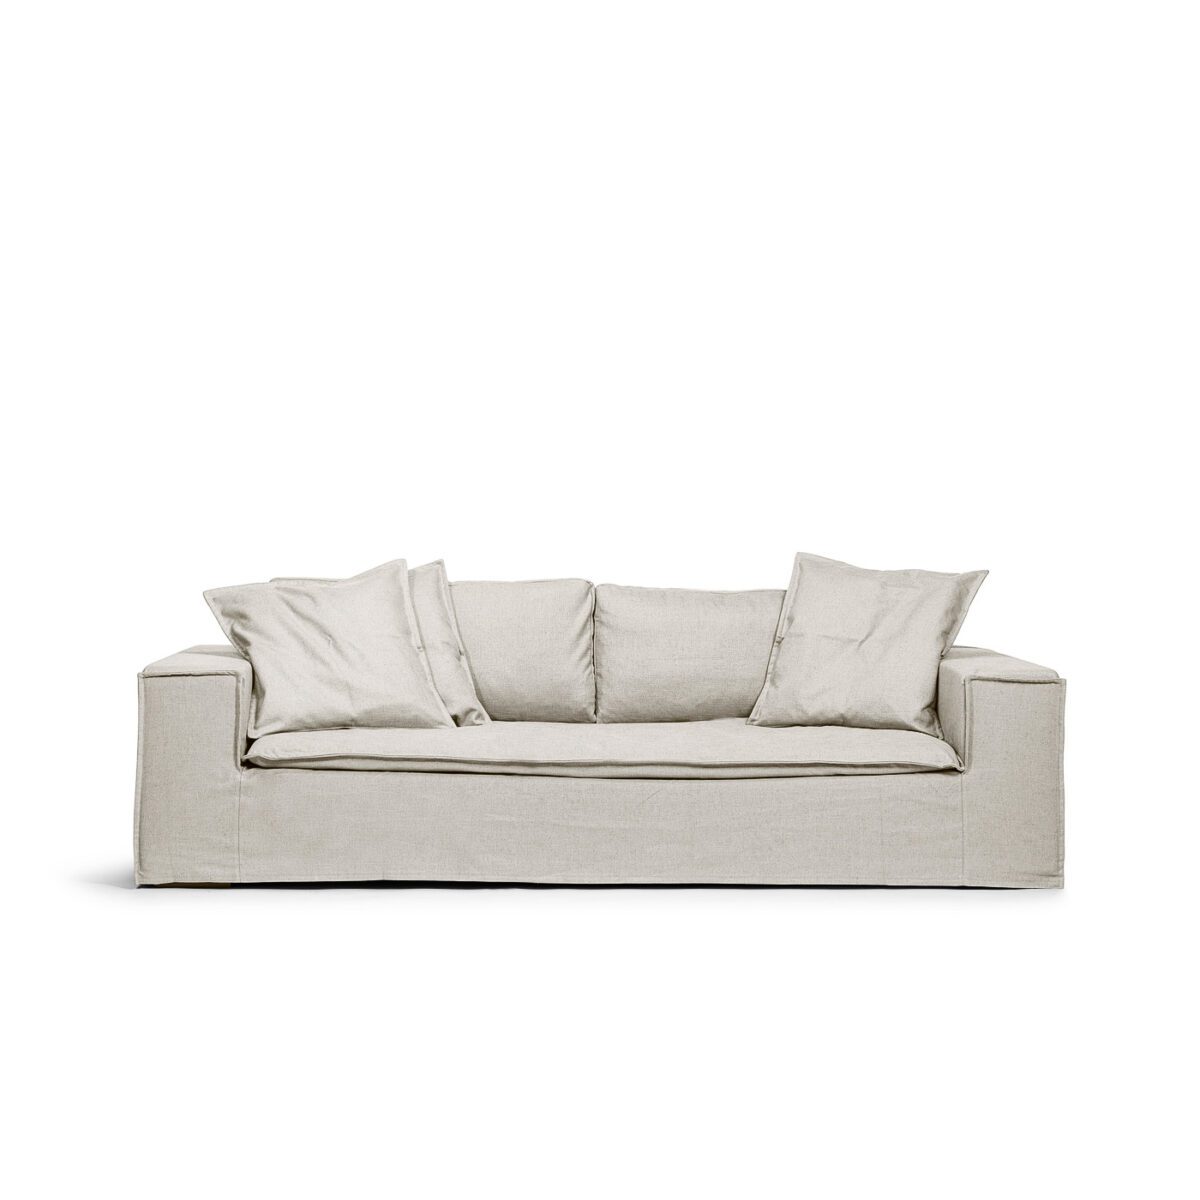 Cover Luca Original 2-Seat Sofa Off White